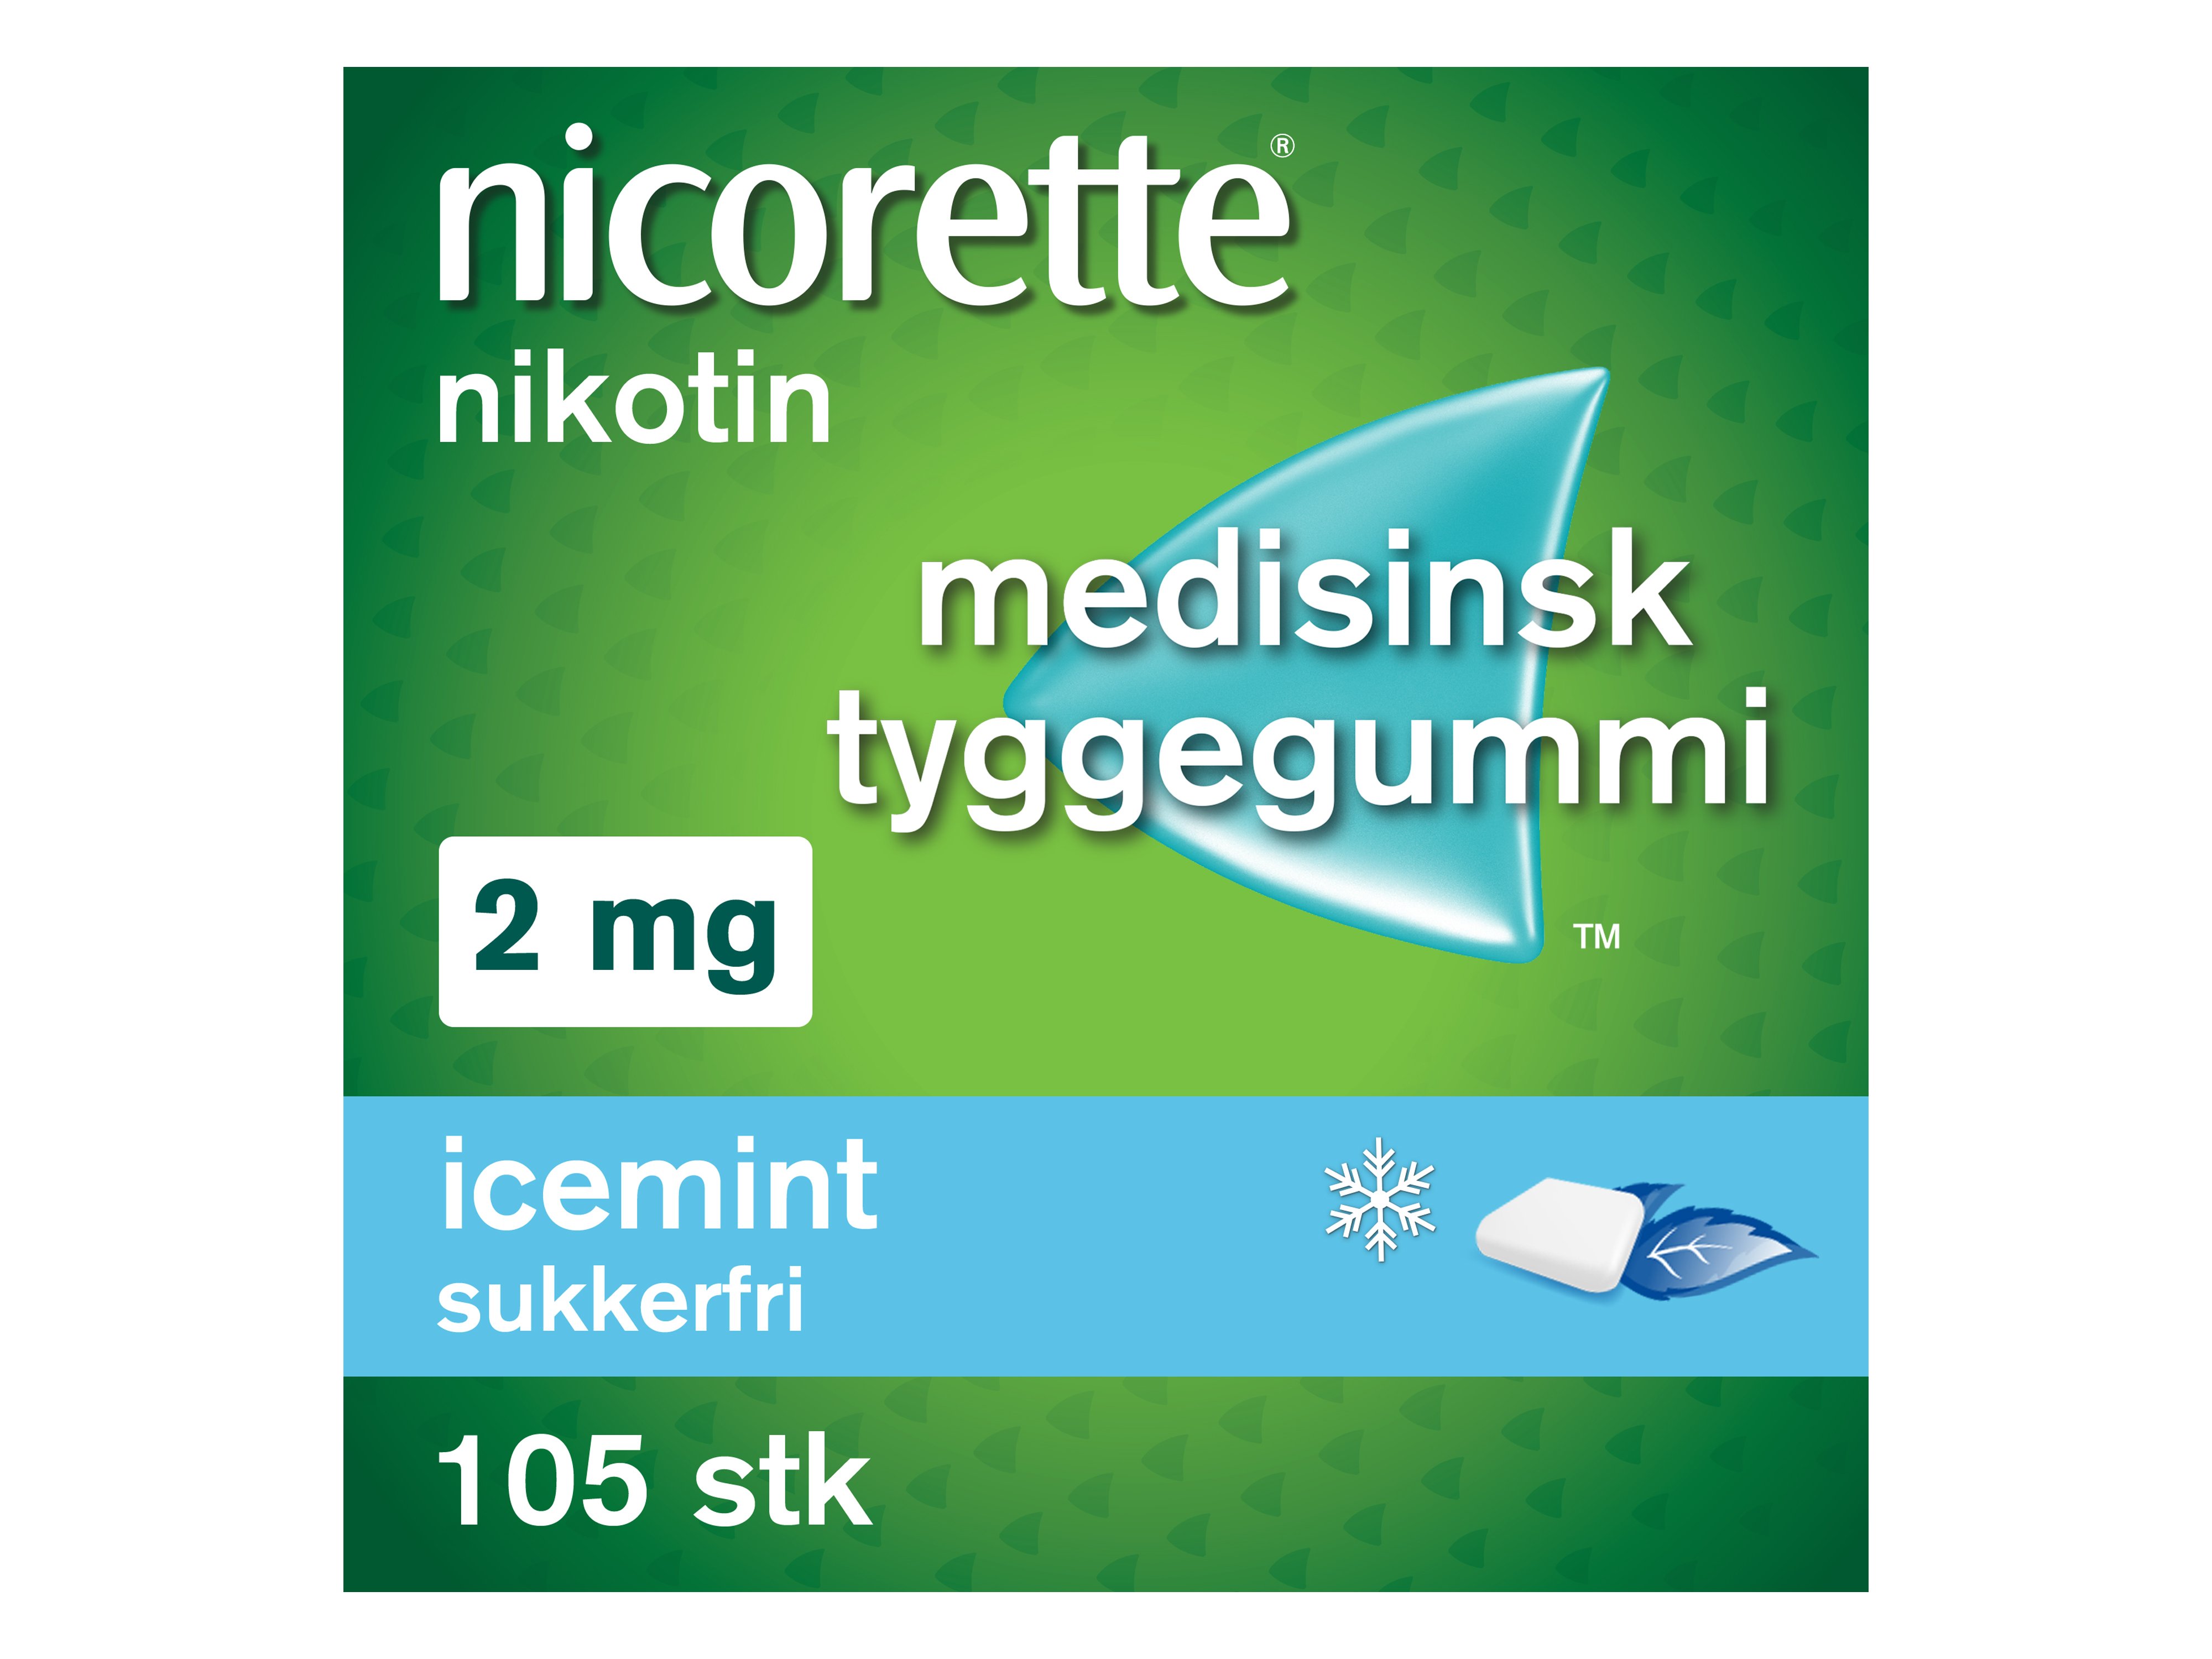 Nicorette 2 mg tyggegummi, Icemint, 105 stk.